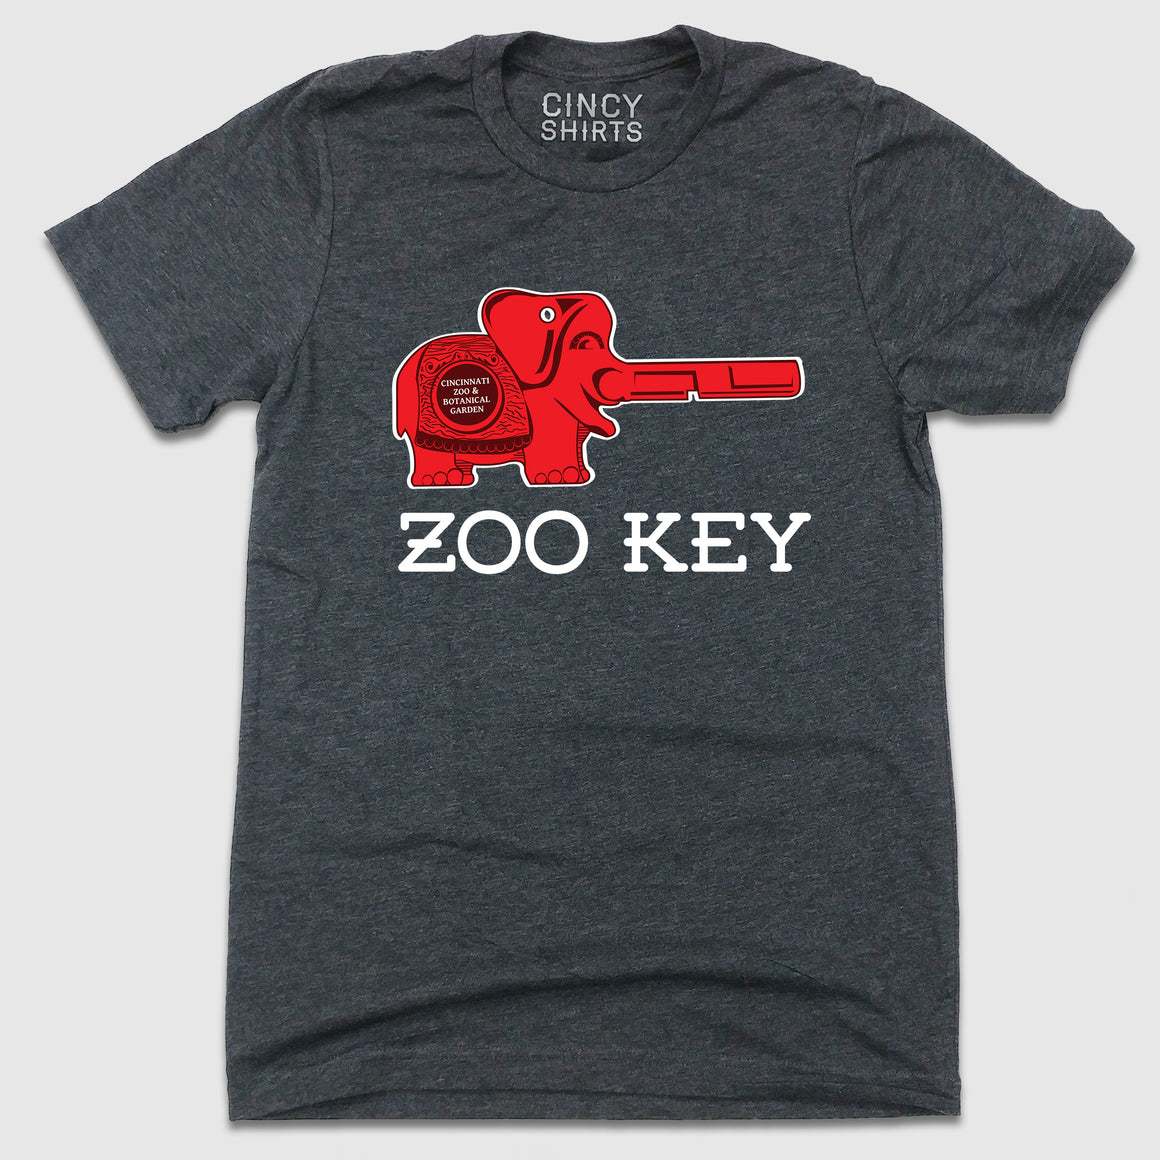 Zoo Key - Cincy Shirts